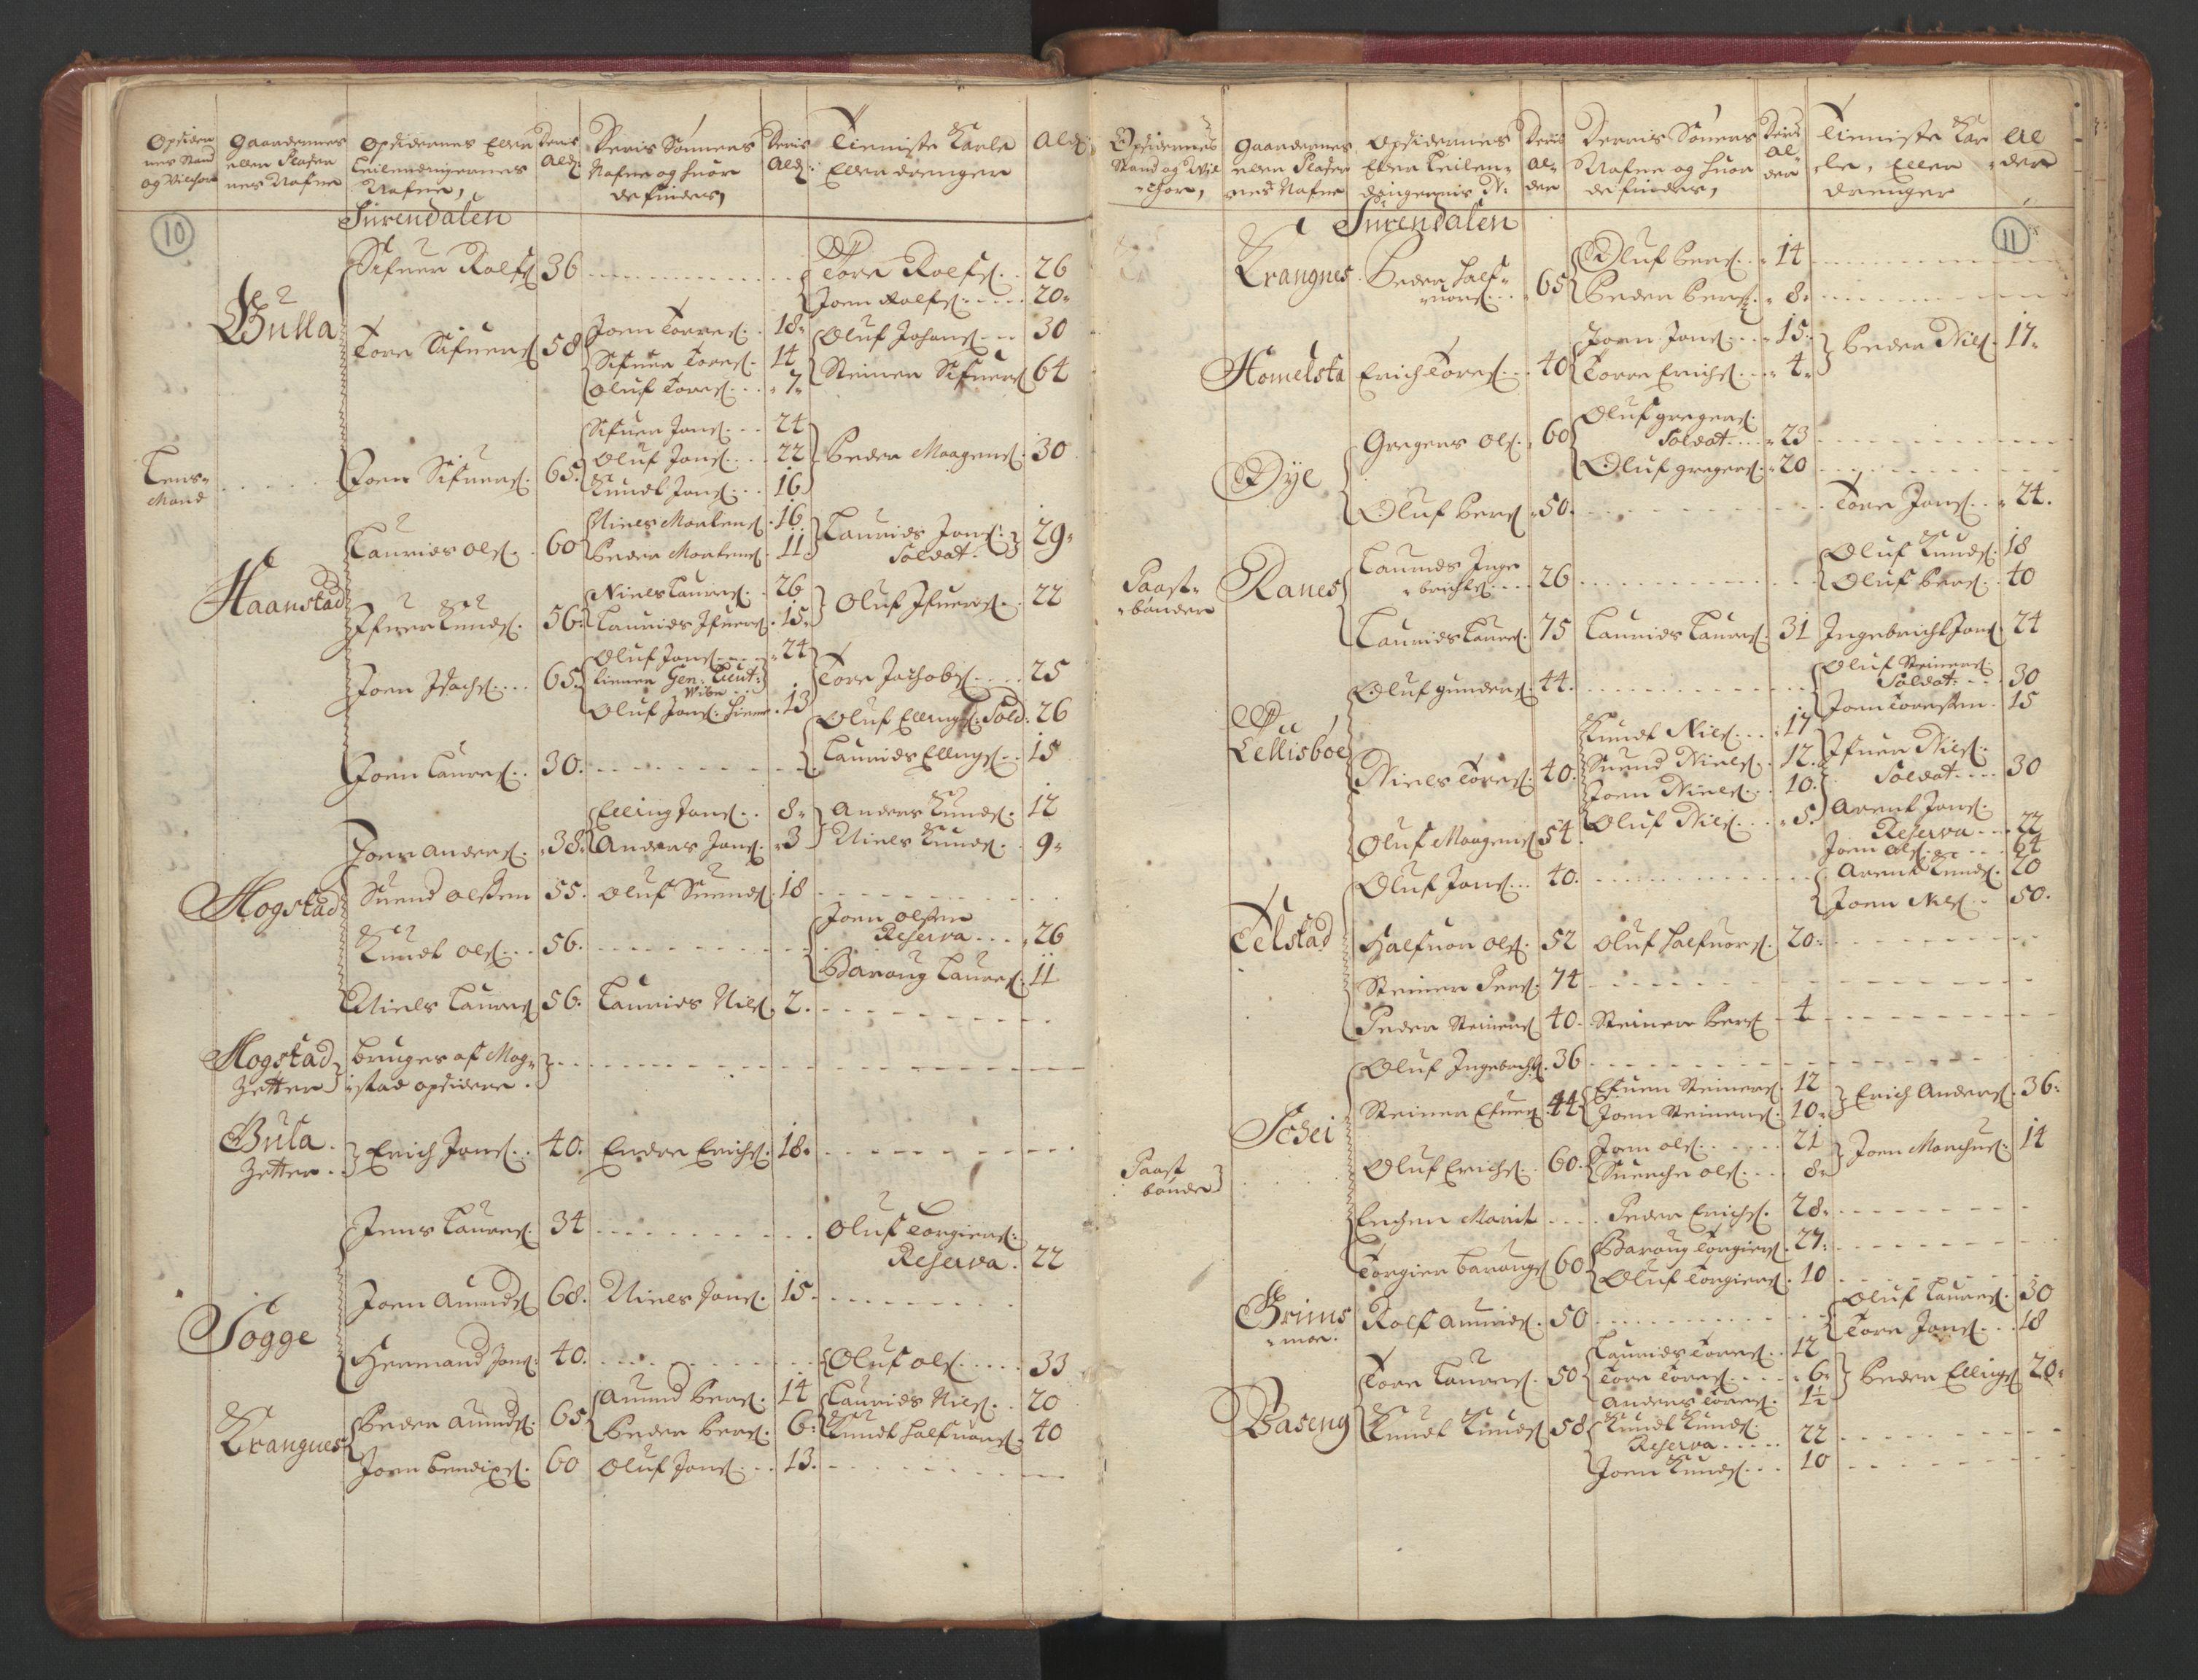 RA, Manntallet 1701, nr. 11: Nordmøre fogderi og Romsdal fogderi, 1701, s. 10-11